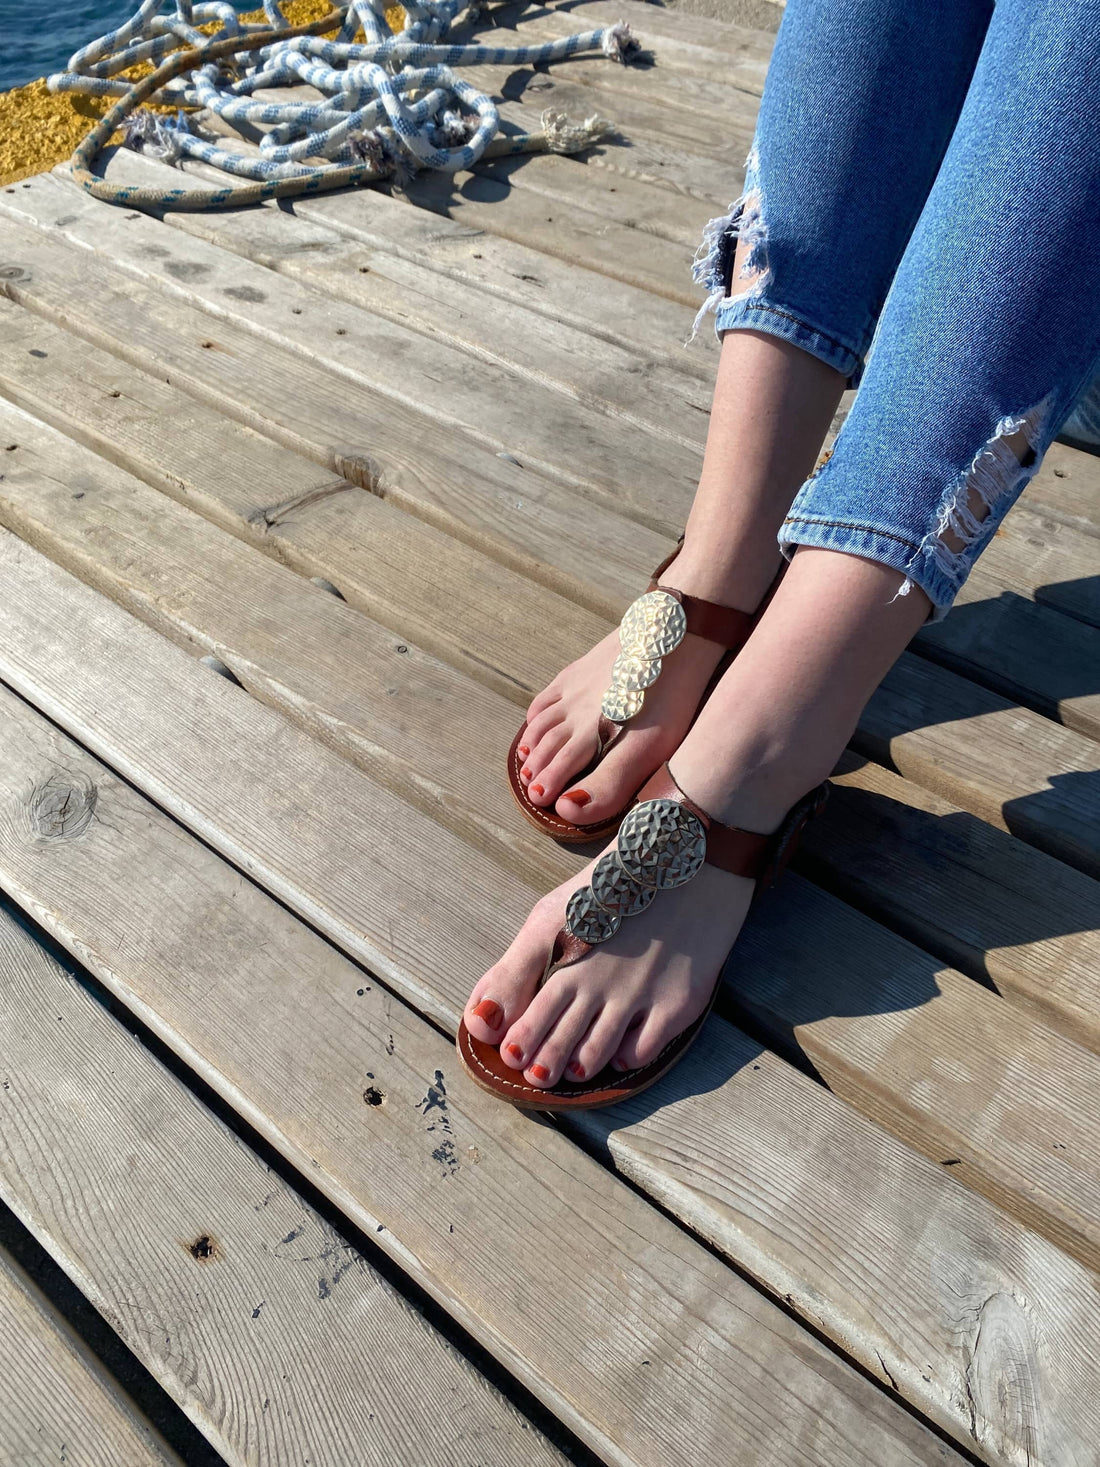 Nereus Chestnut Brown Leather Women’s Sandals - Handmade Flat Sandal, Low Heel Strapped Travel Comfortable Sandal